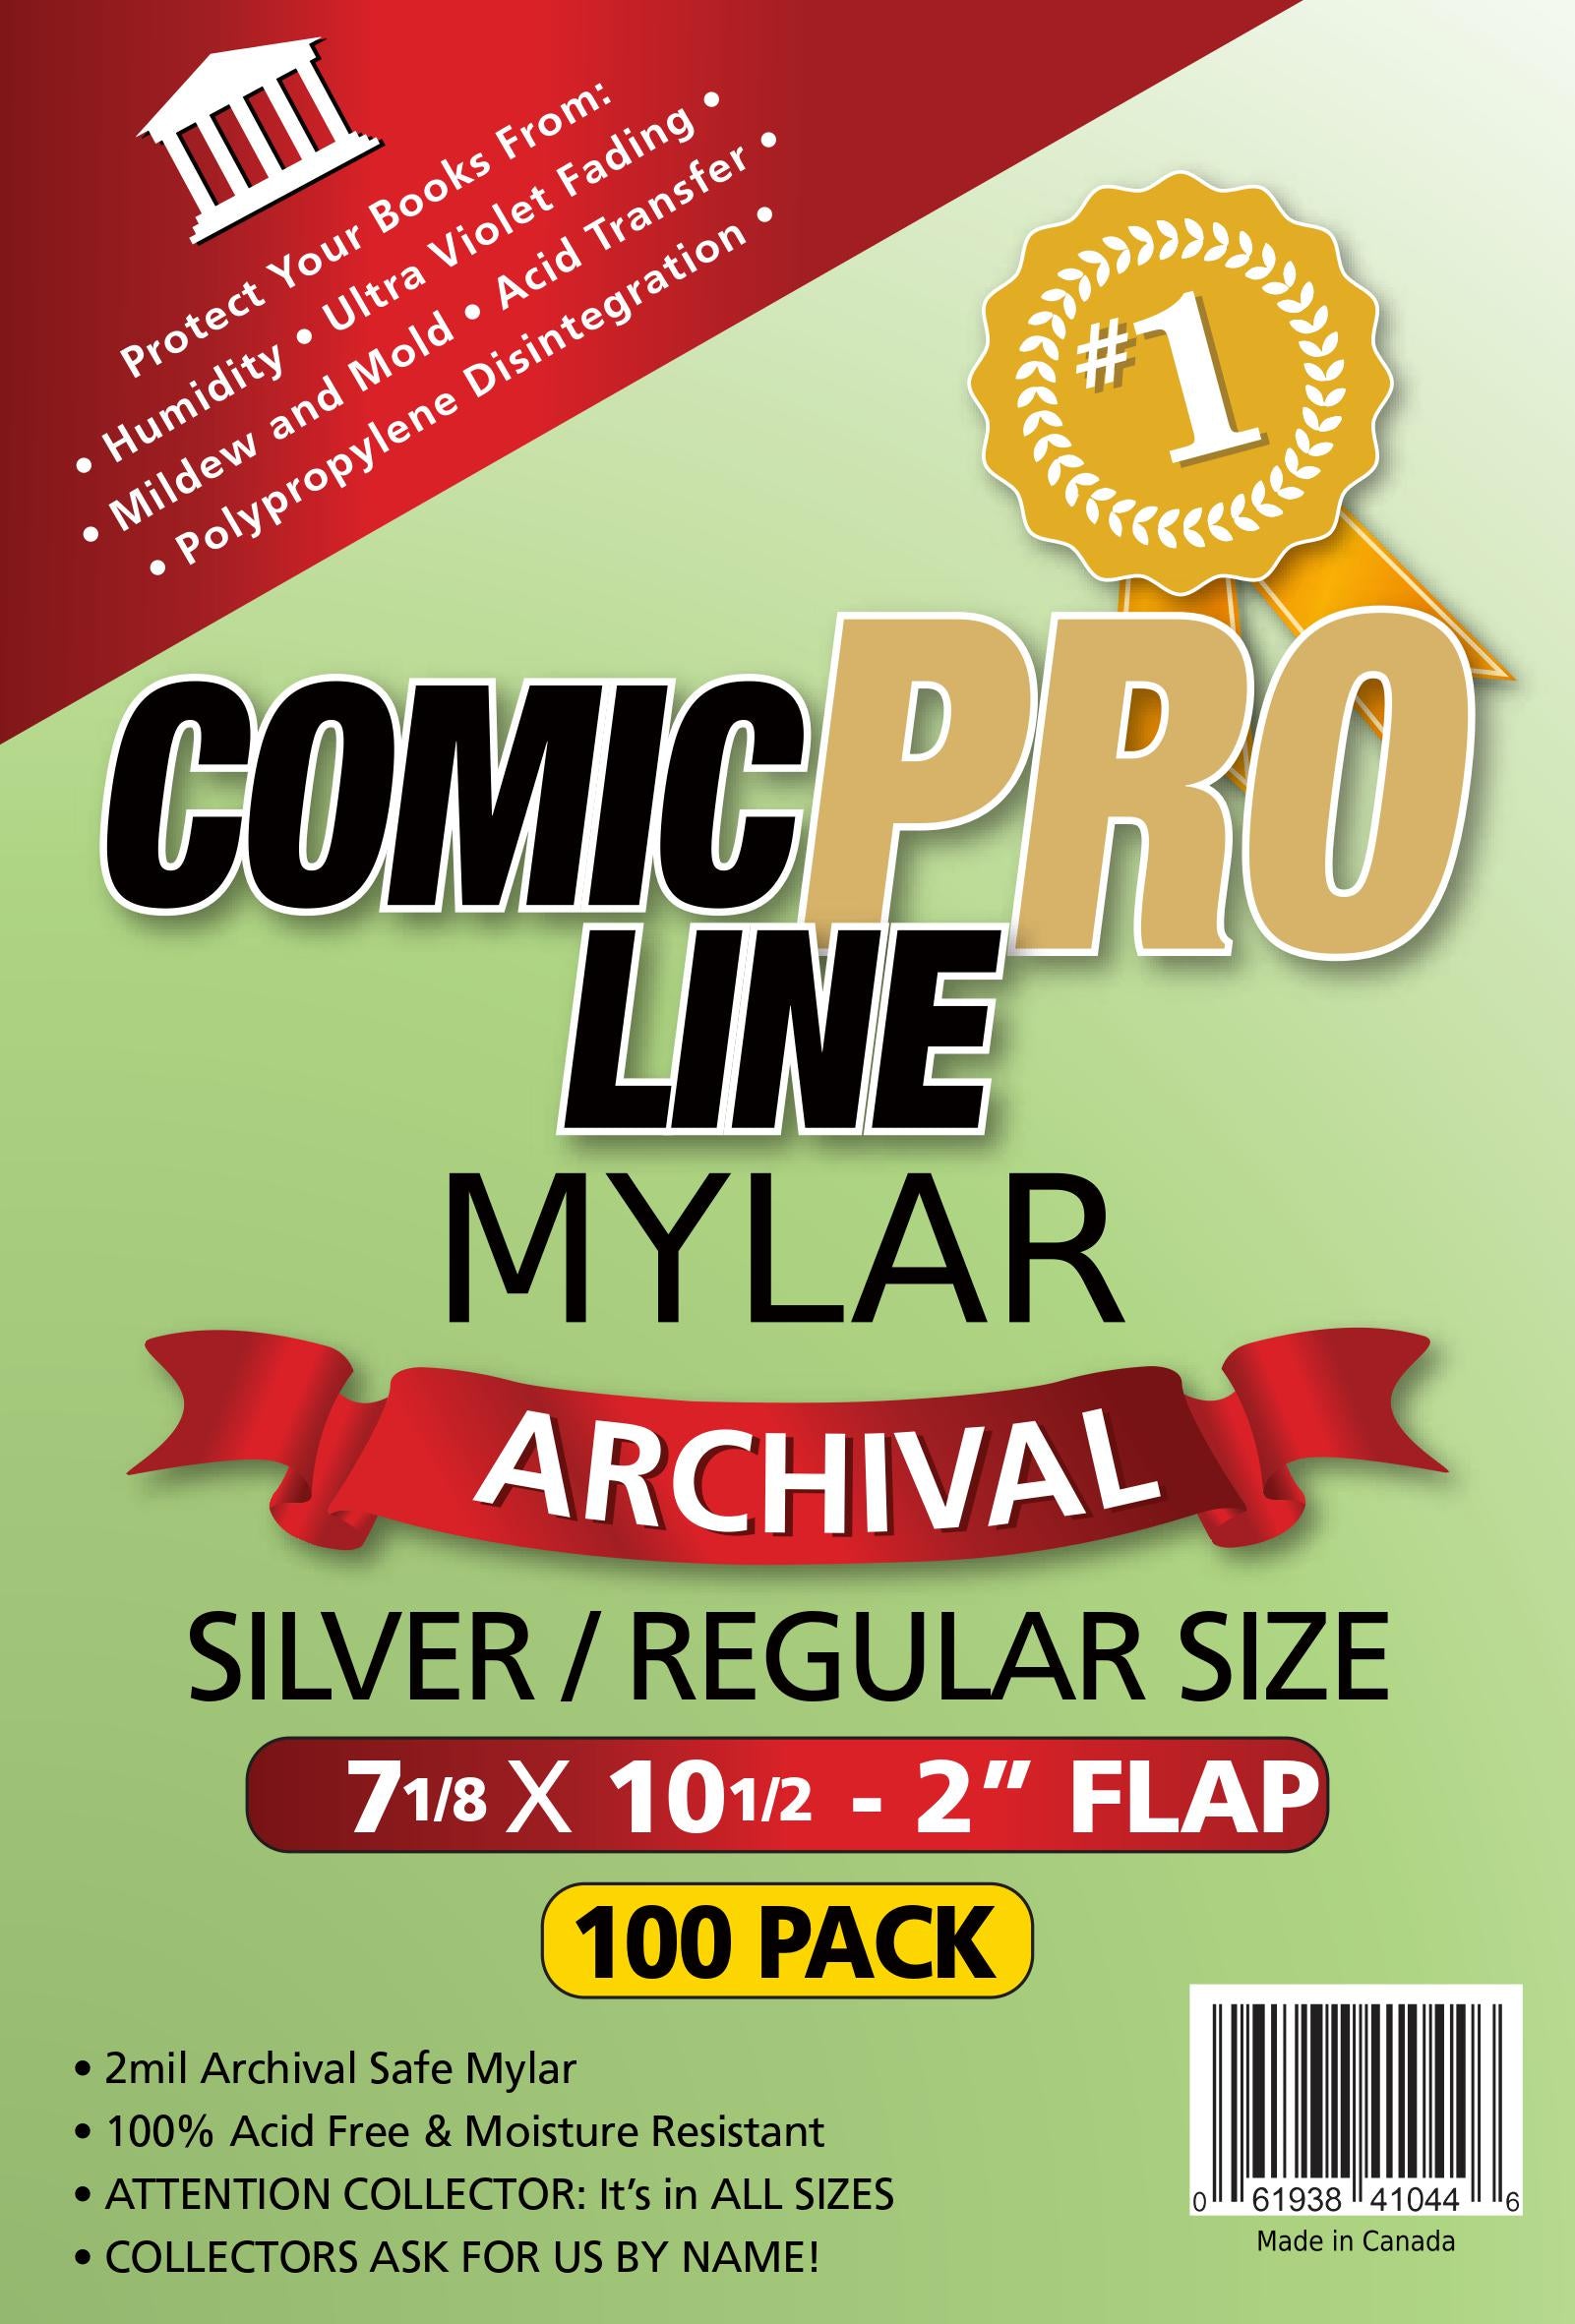 BCW Comic Bags, Silver 7 1/8 X10 1/2 + 1 1/2 Flap 2 mil Polypropylene  (100 ct)